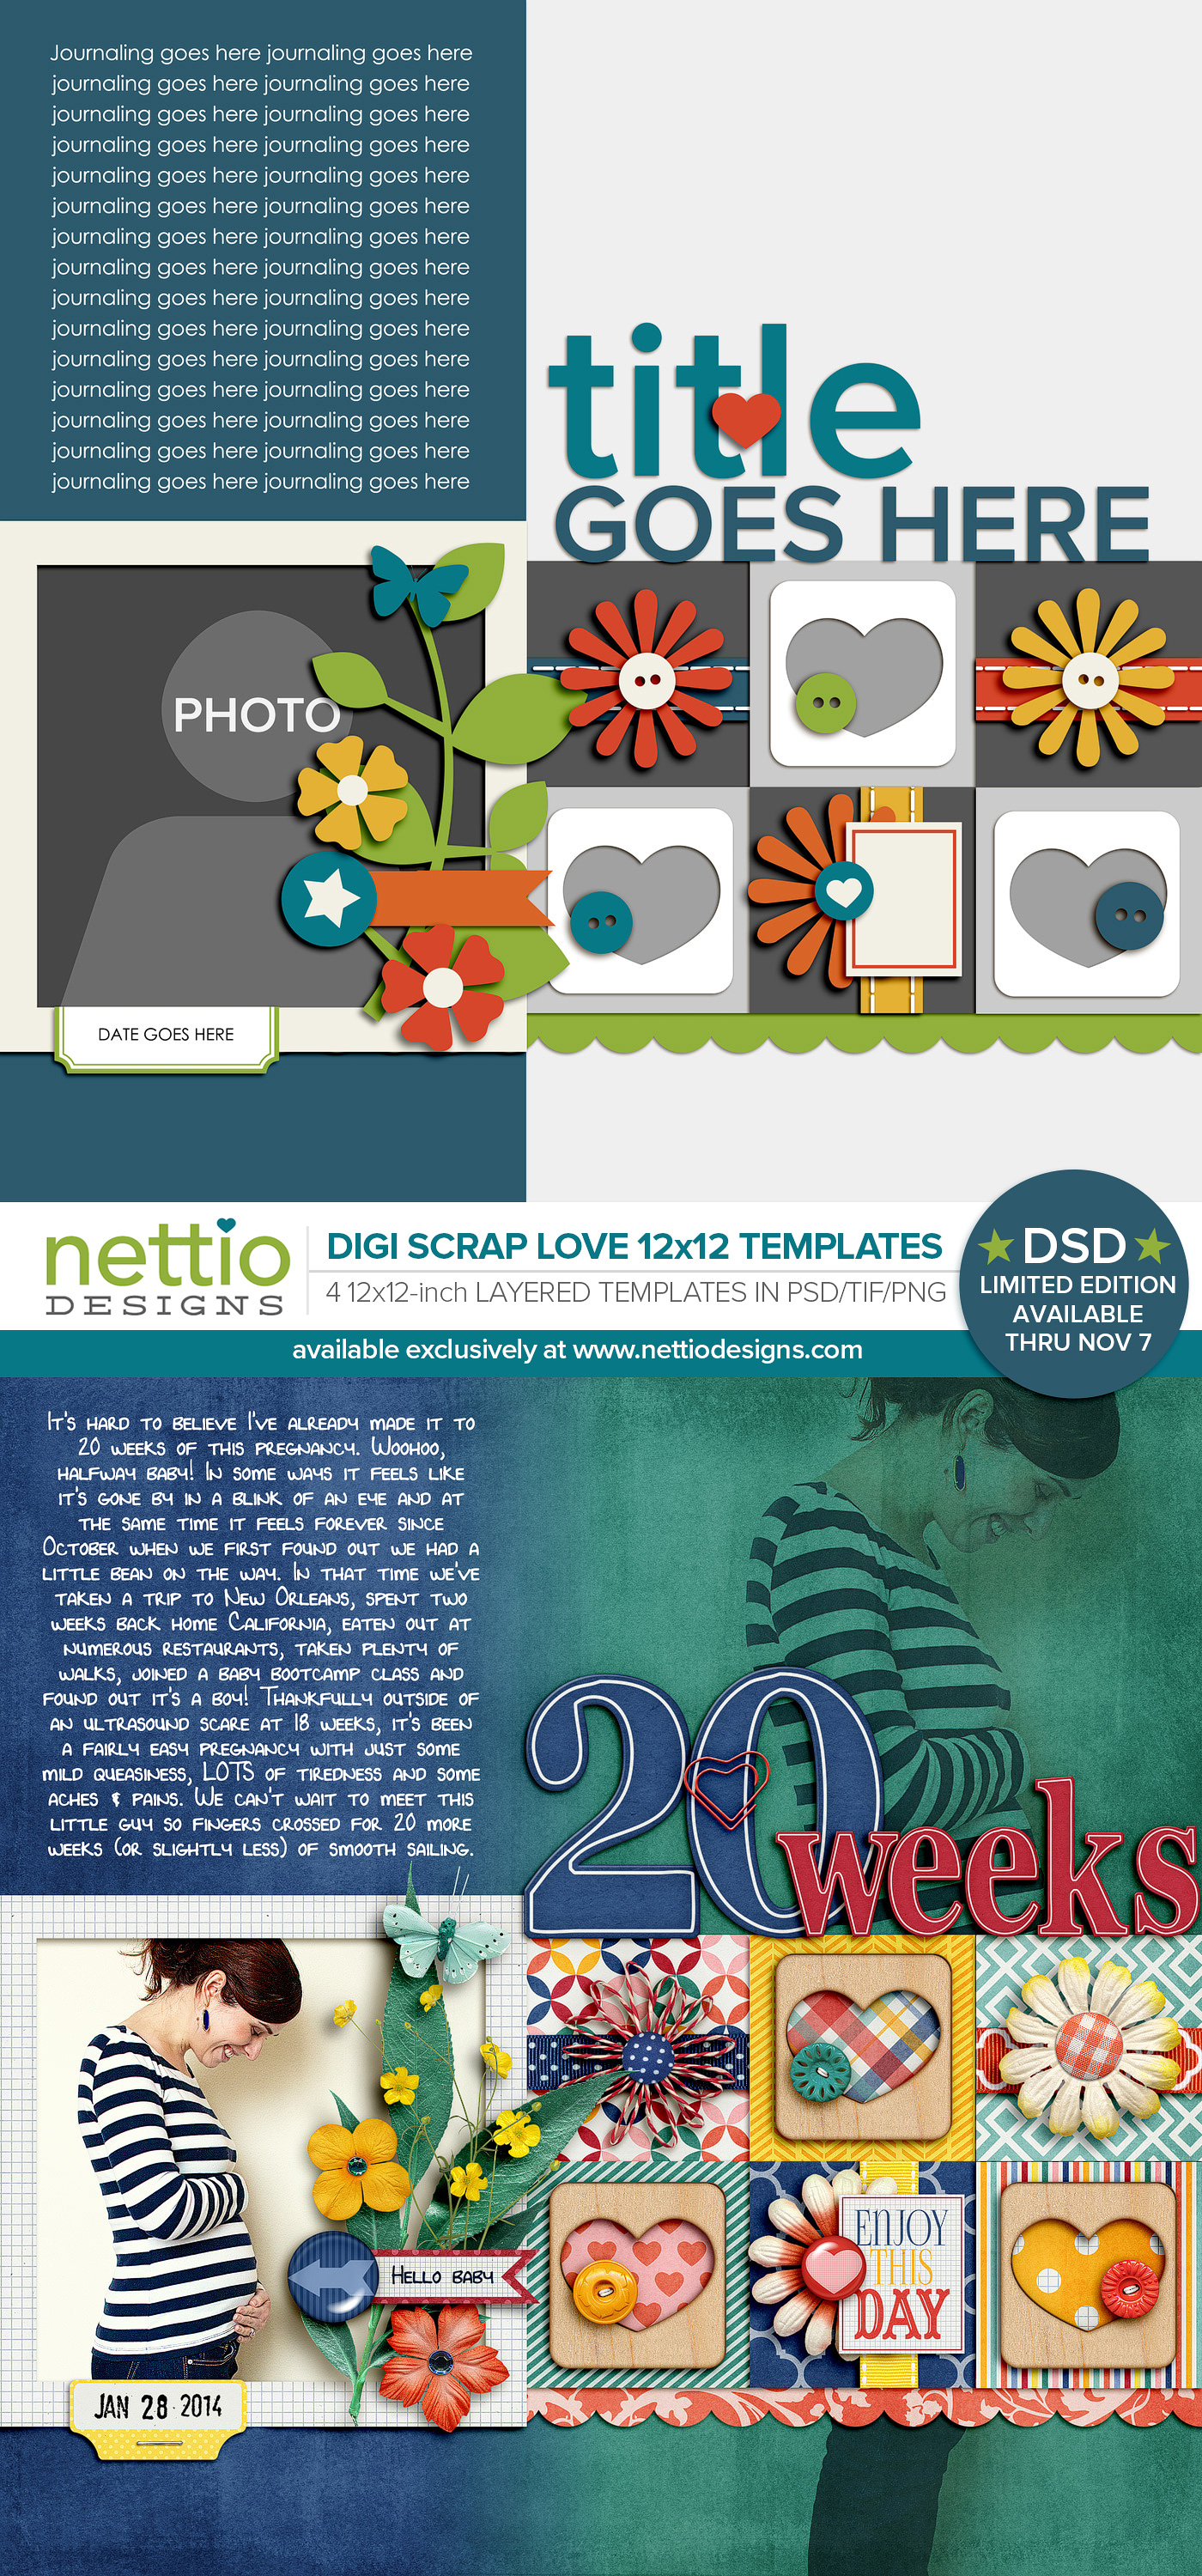 nettio designs digital scrapbooking template layout 1